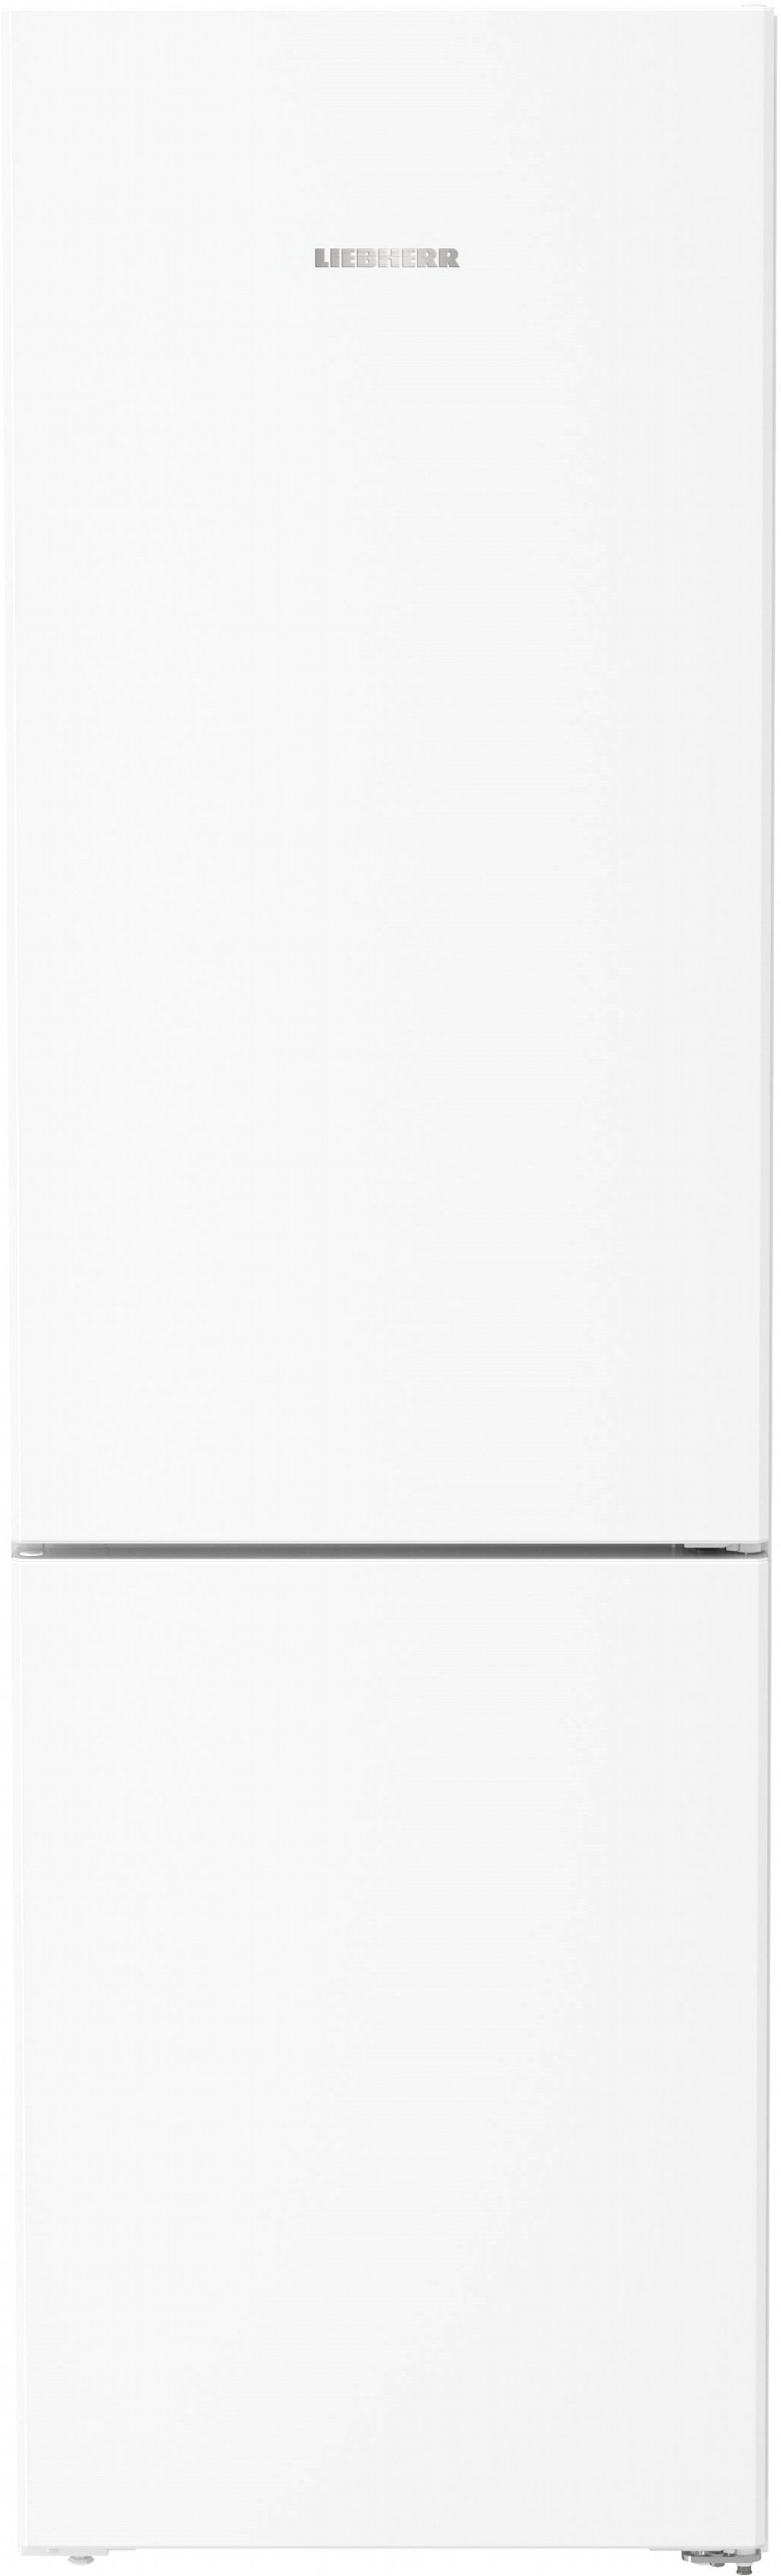 Холодильник Liebherr CND 5703